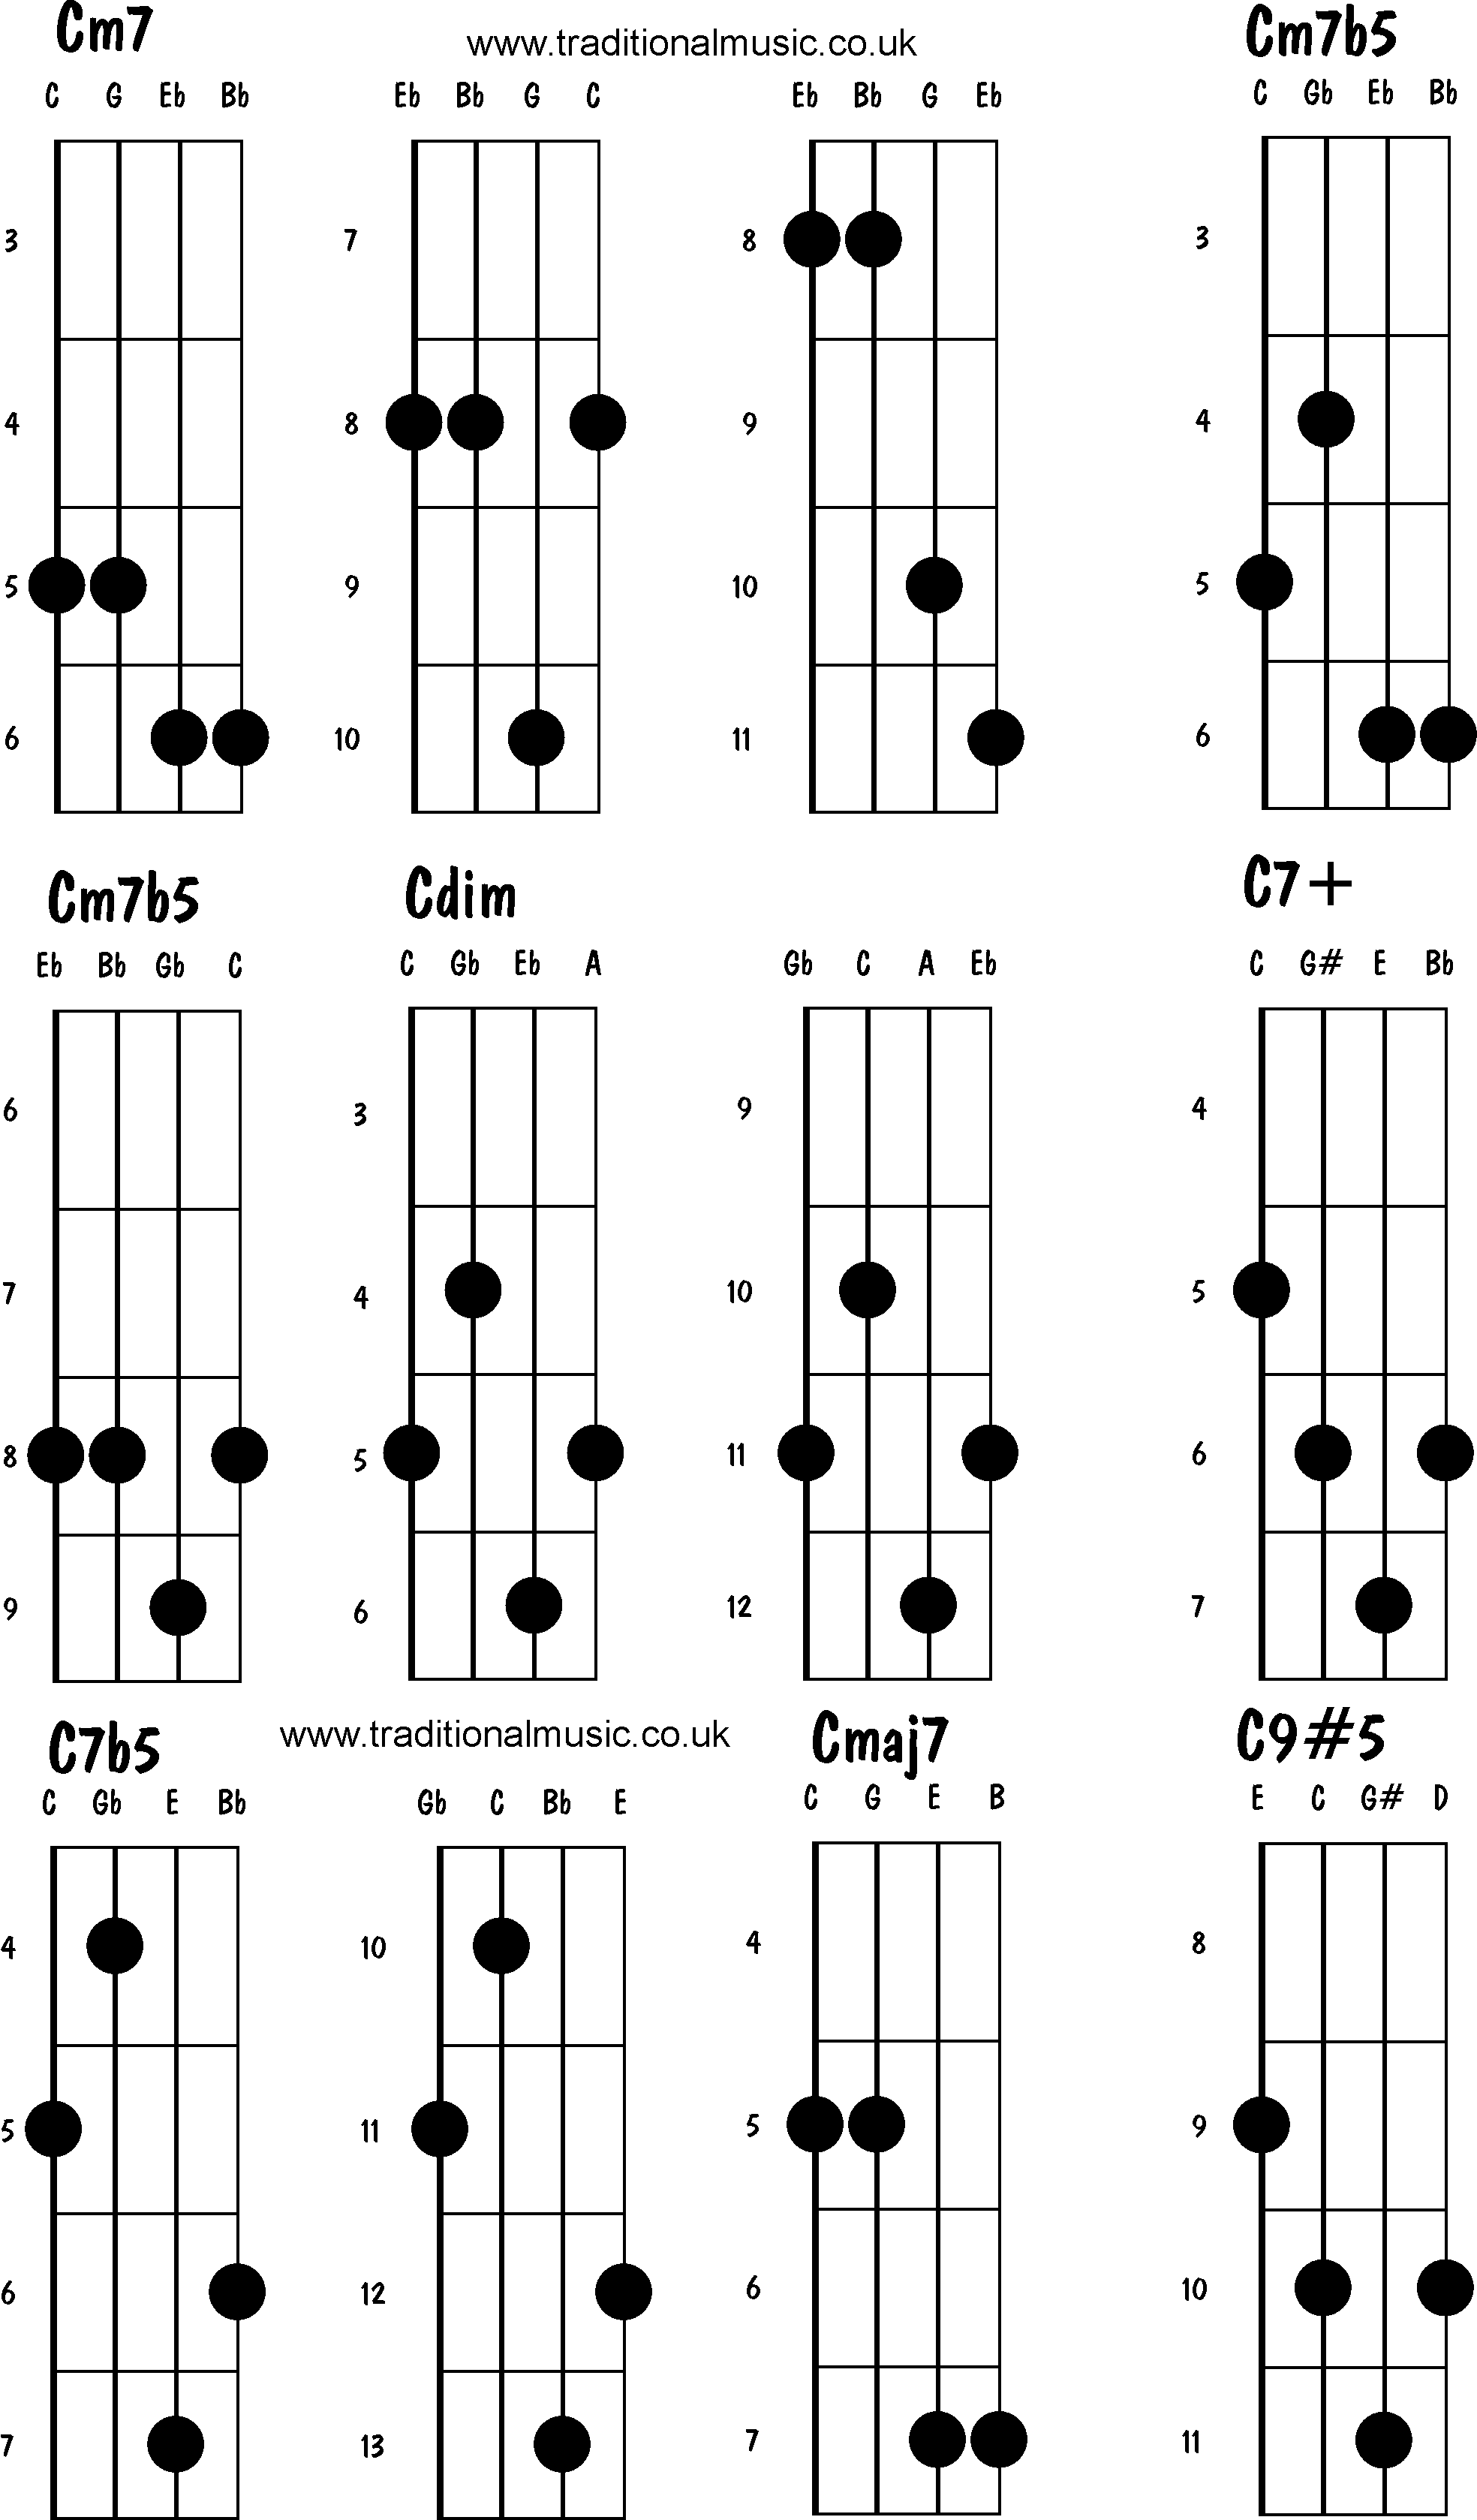 Advanced mandolin chords:Cm7, Cm7b5, Cdim, C7b5, Cmaj7, C9#5